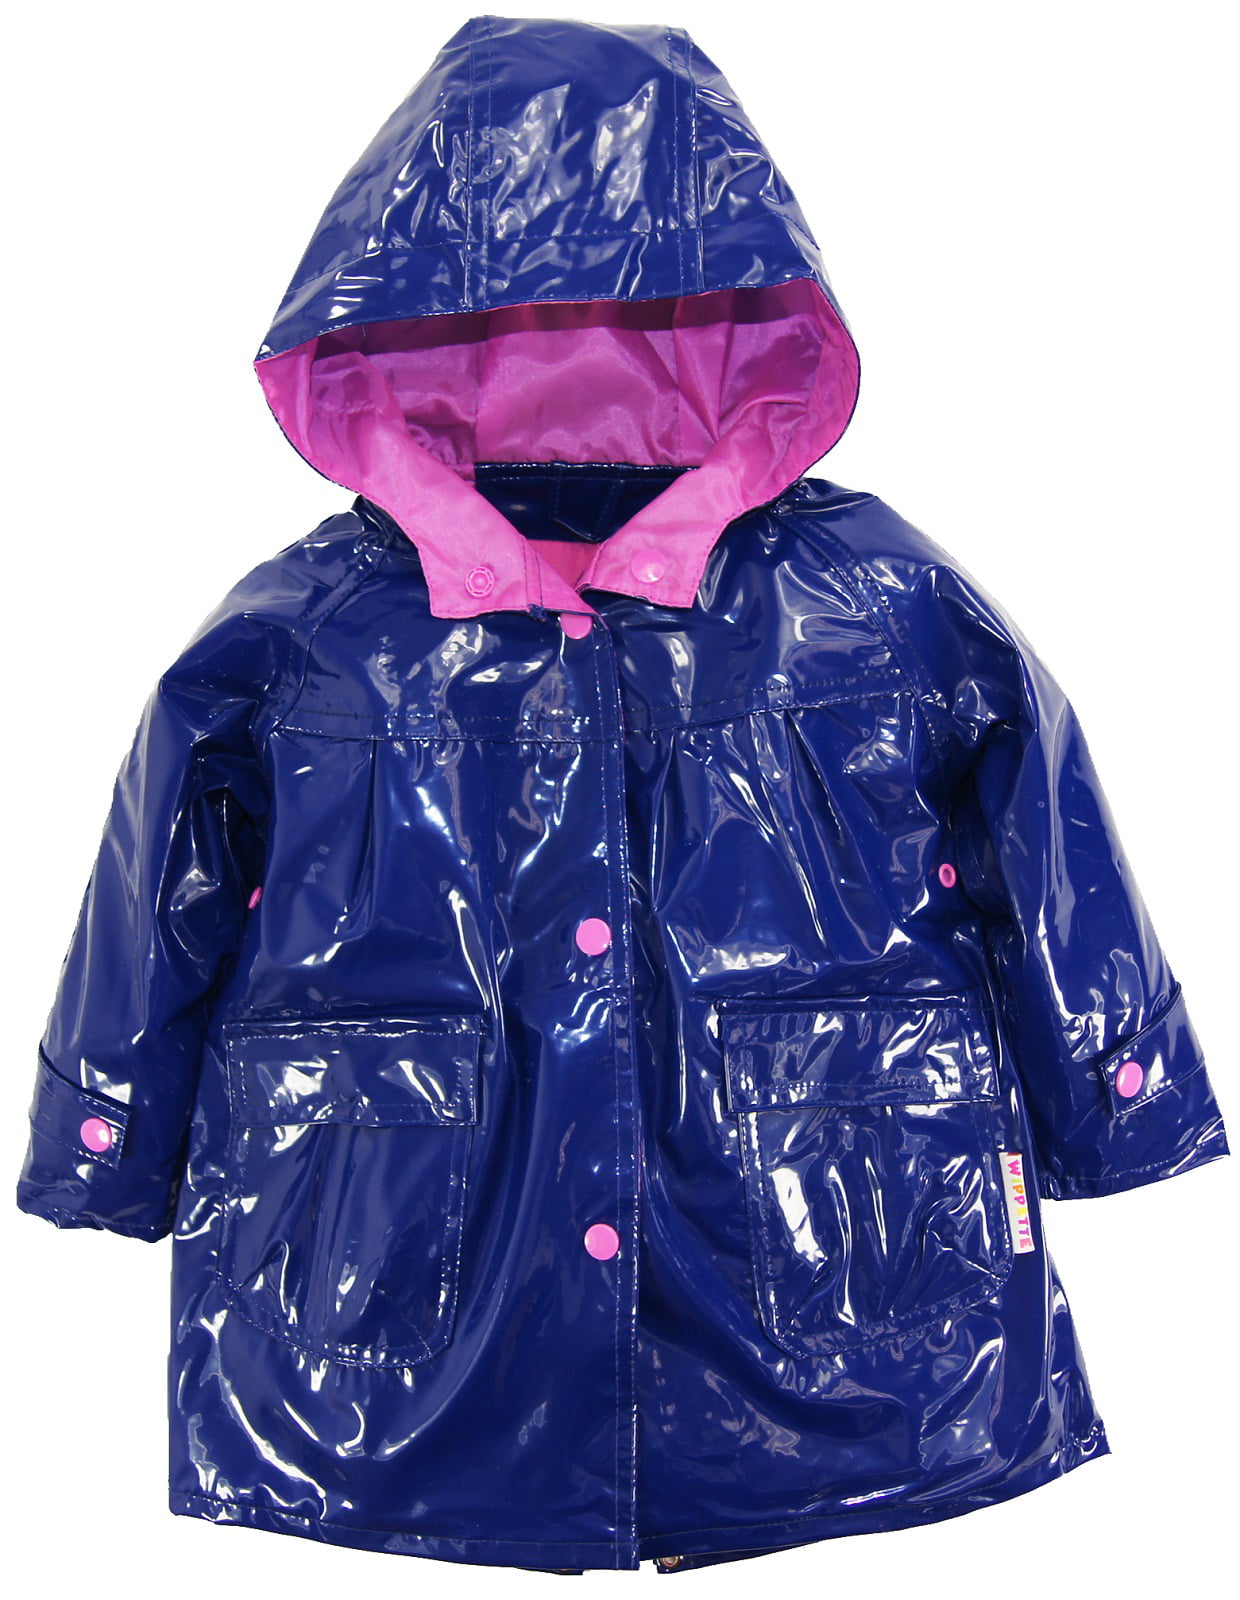 Wippette Little Girls Solid Color Hooded Raincoat Jacket